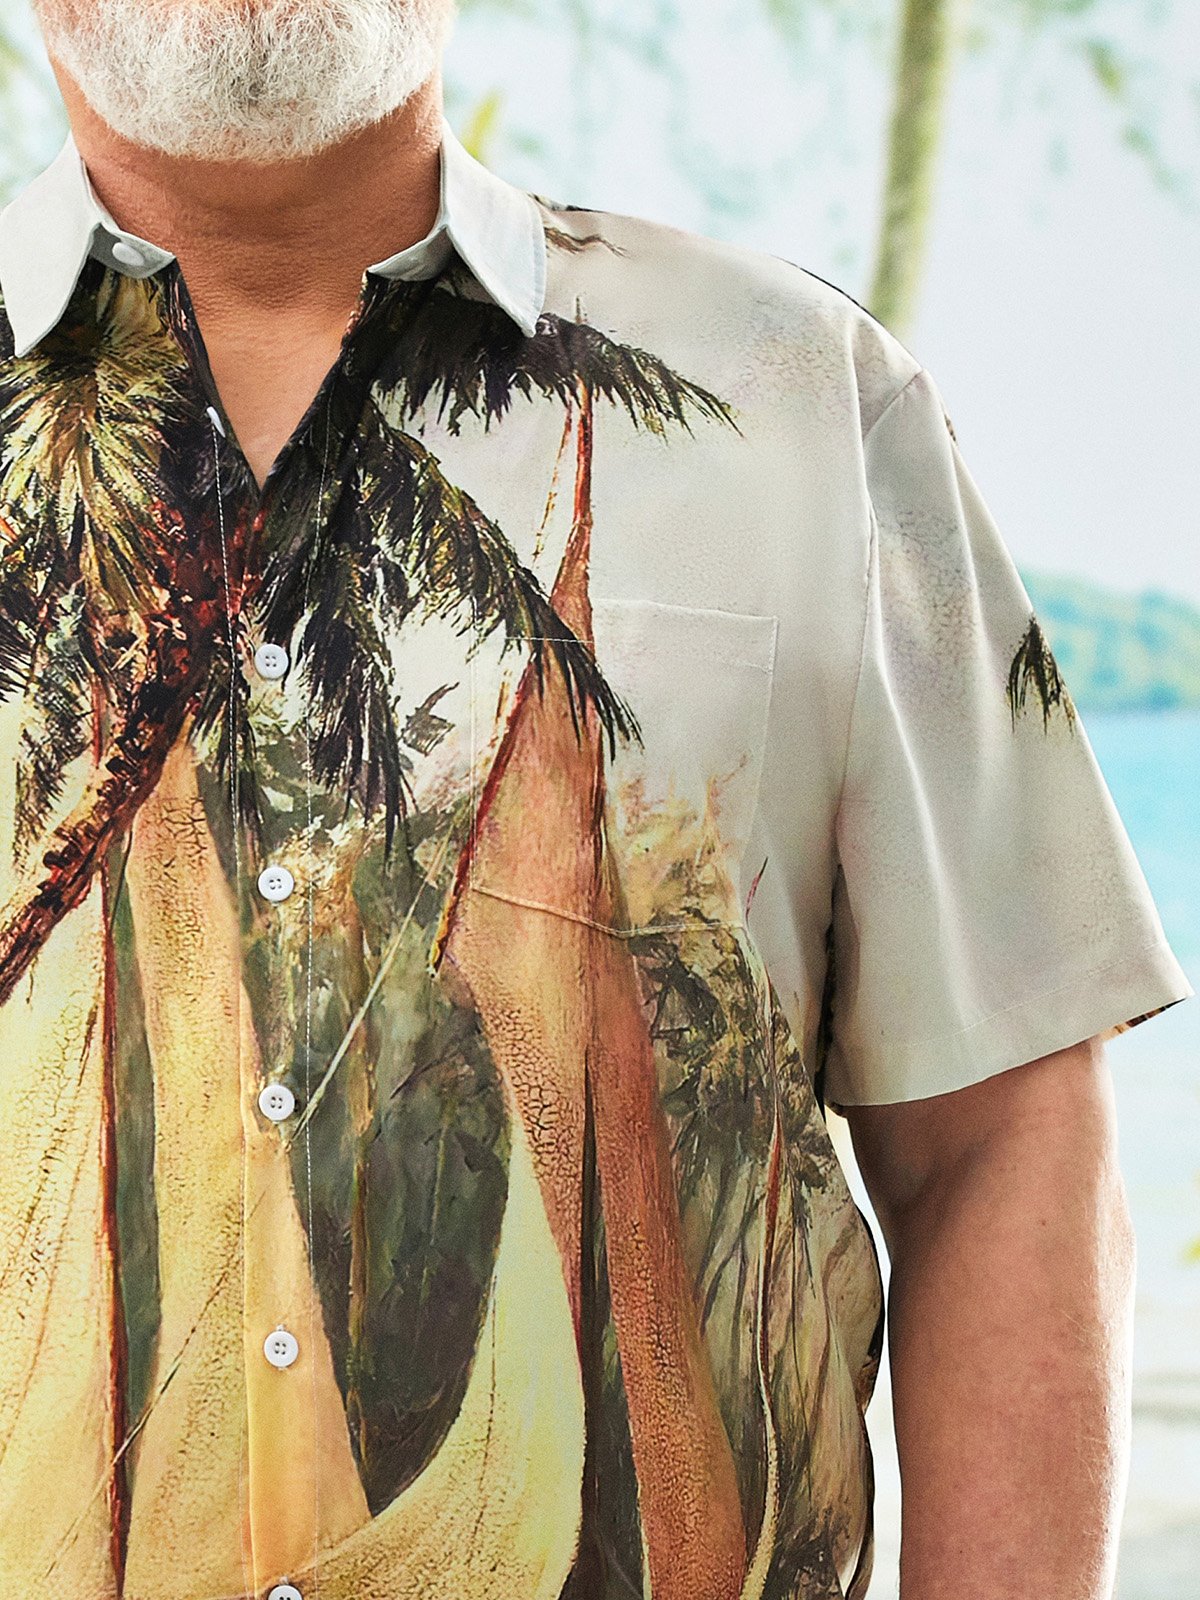 Hardaddy Big Size Coconut Tree Chest Pocket Short Sleeve Hawaiian Shirt